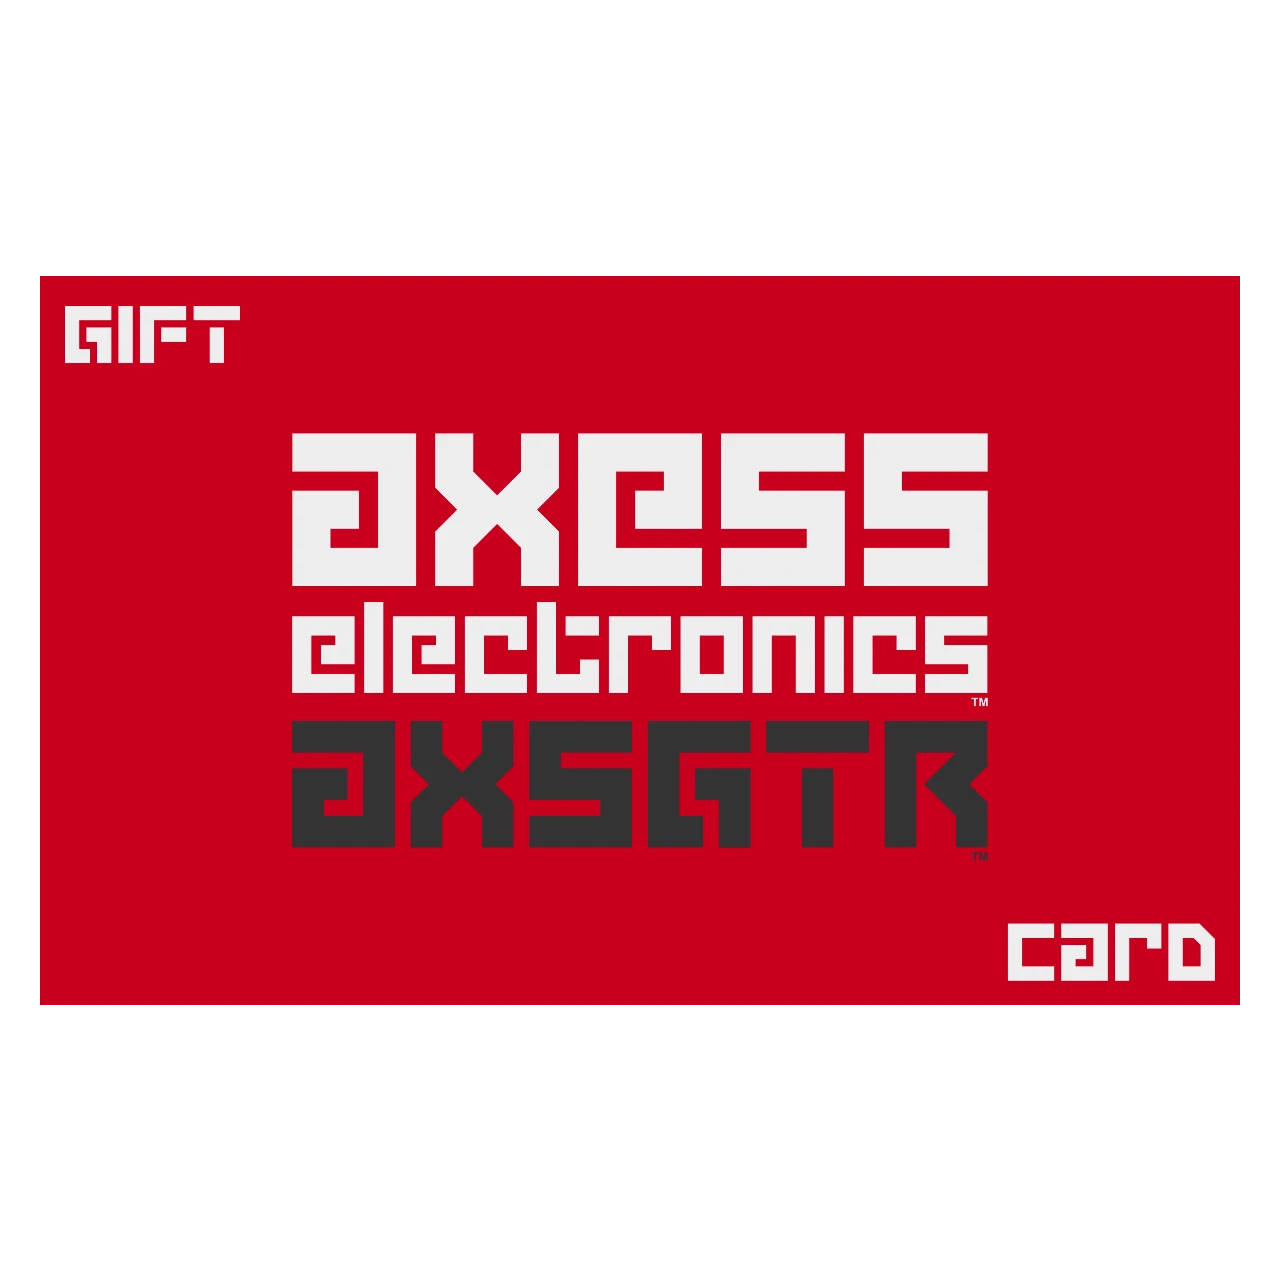 axsgtr axess electronics gift card coupon code discount